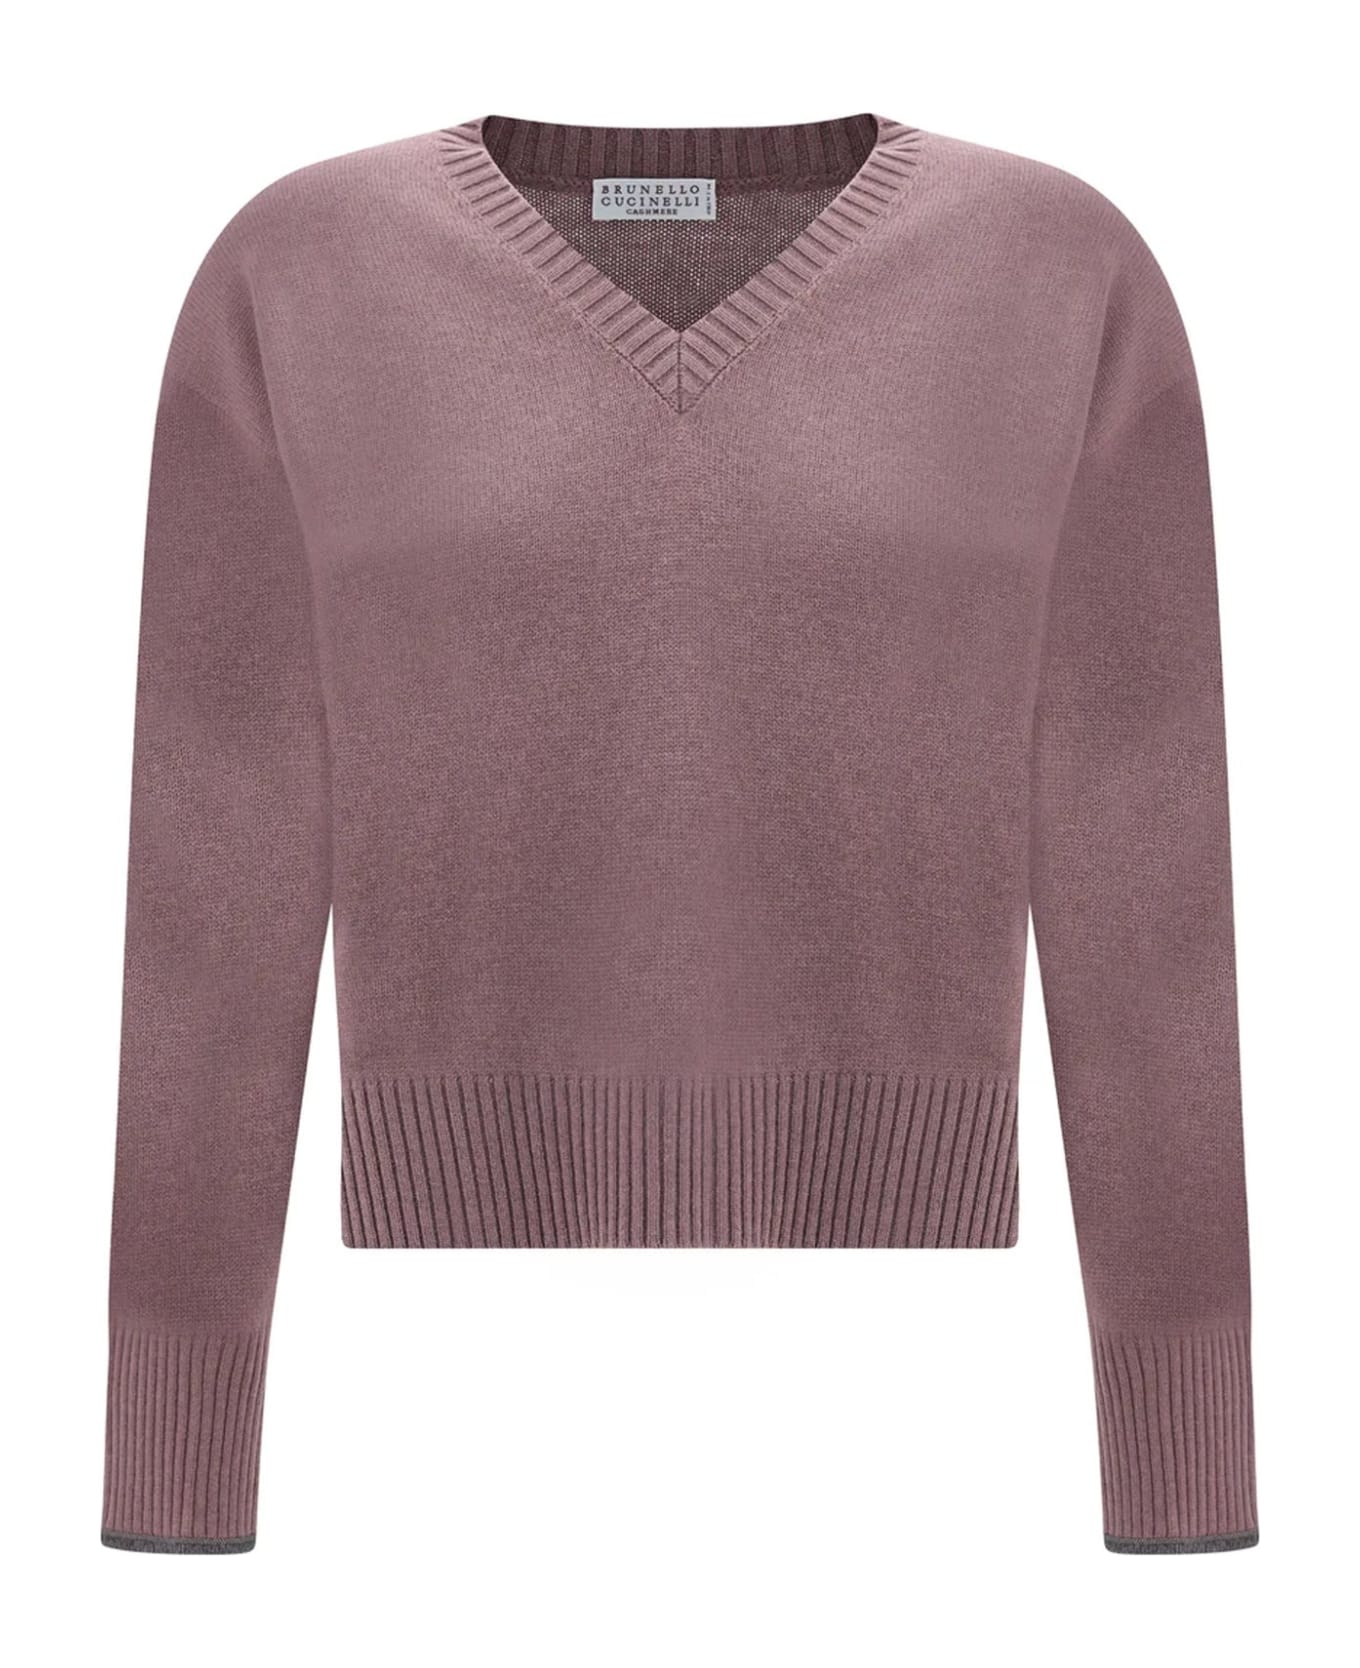 Brunello Cucinelli Cashmere Sweater - Pink